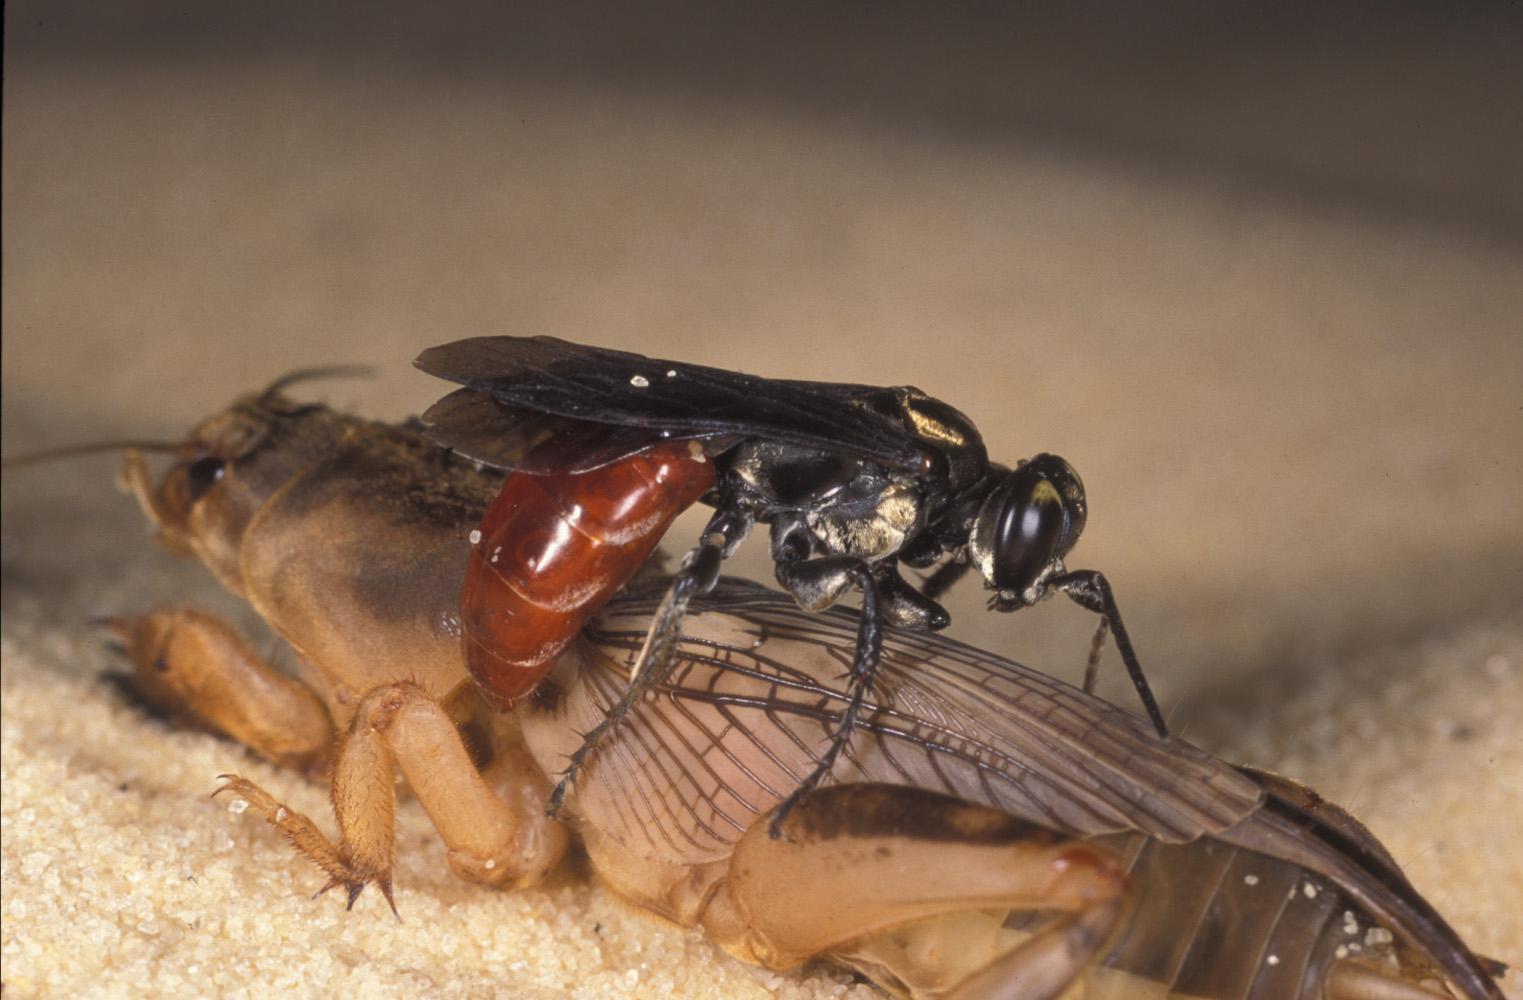 A Larra bicolor wasp attacking a mole cricket. (Lyle Buss, University of Florida)